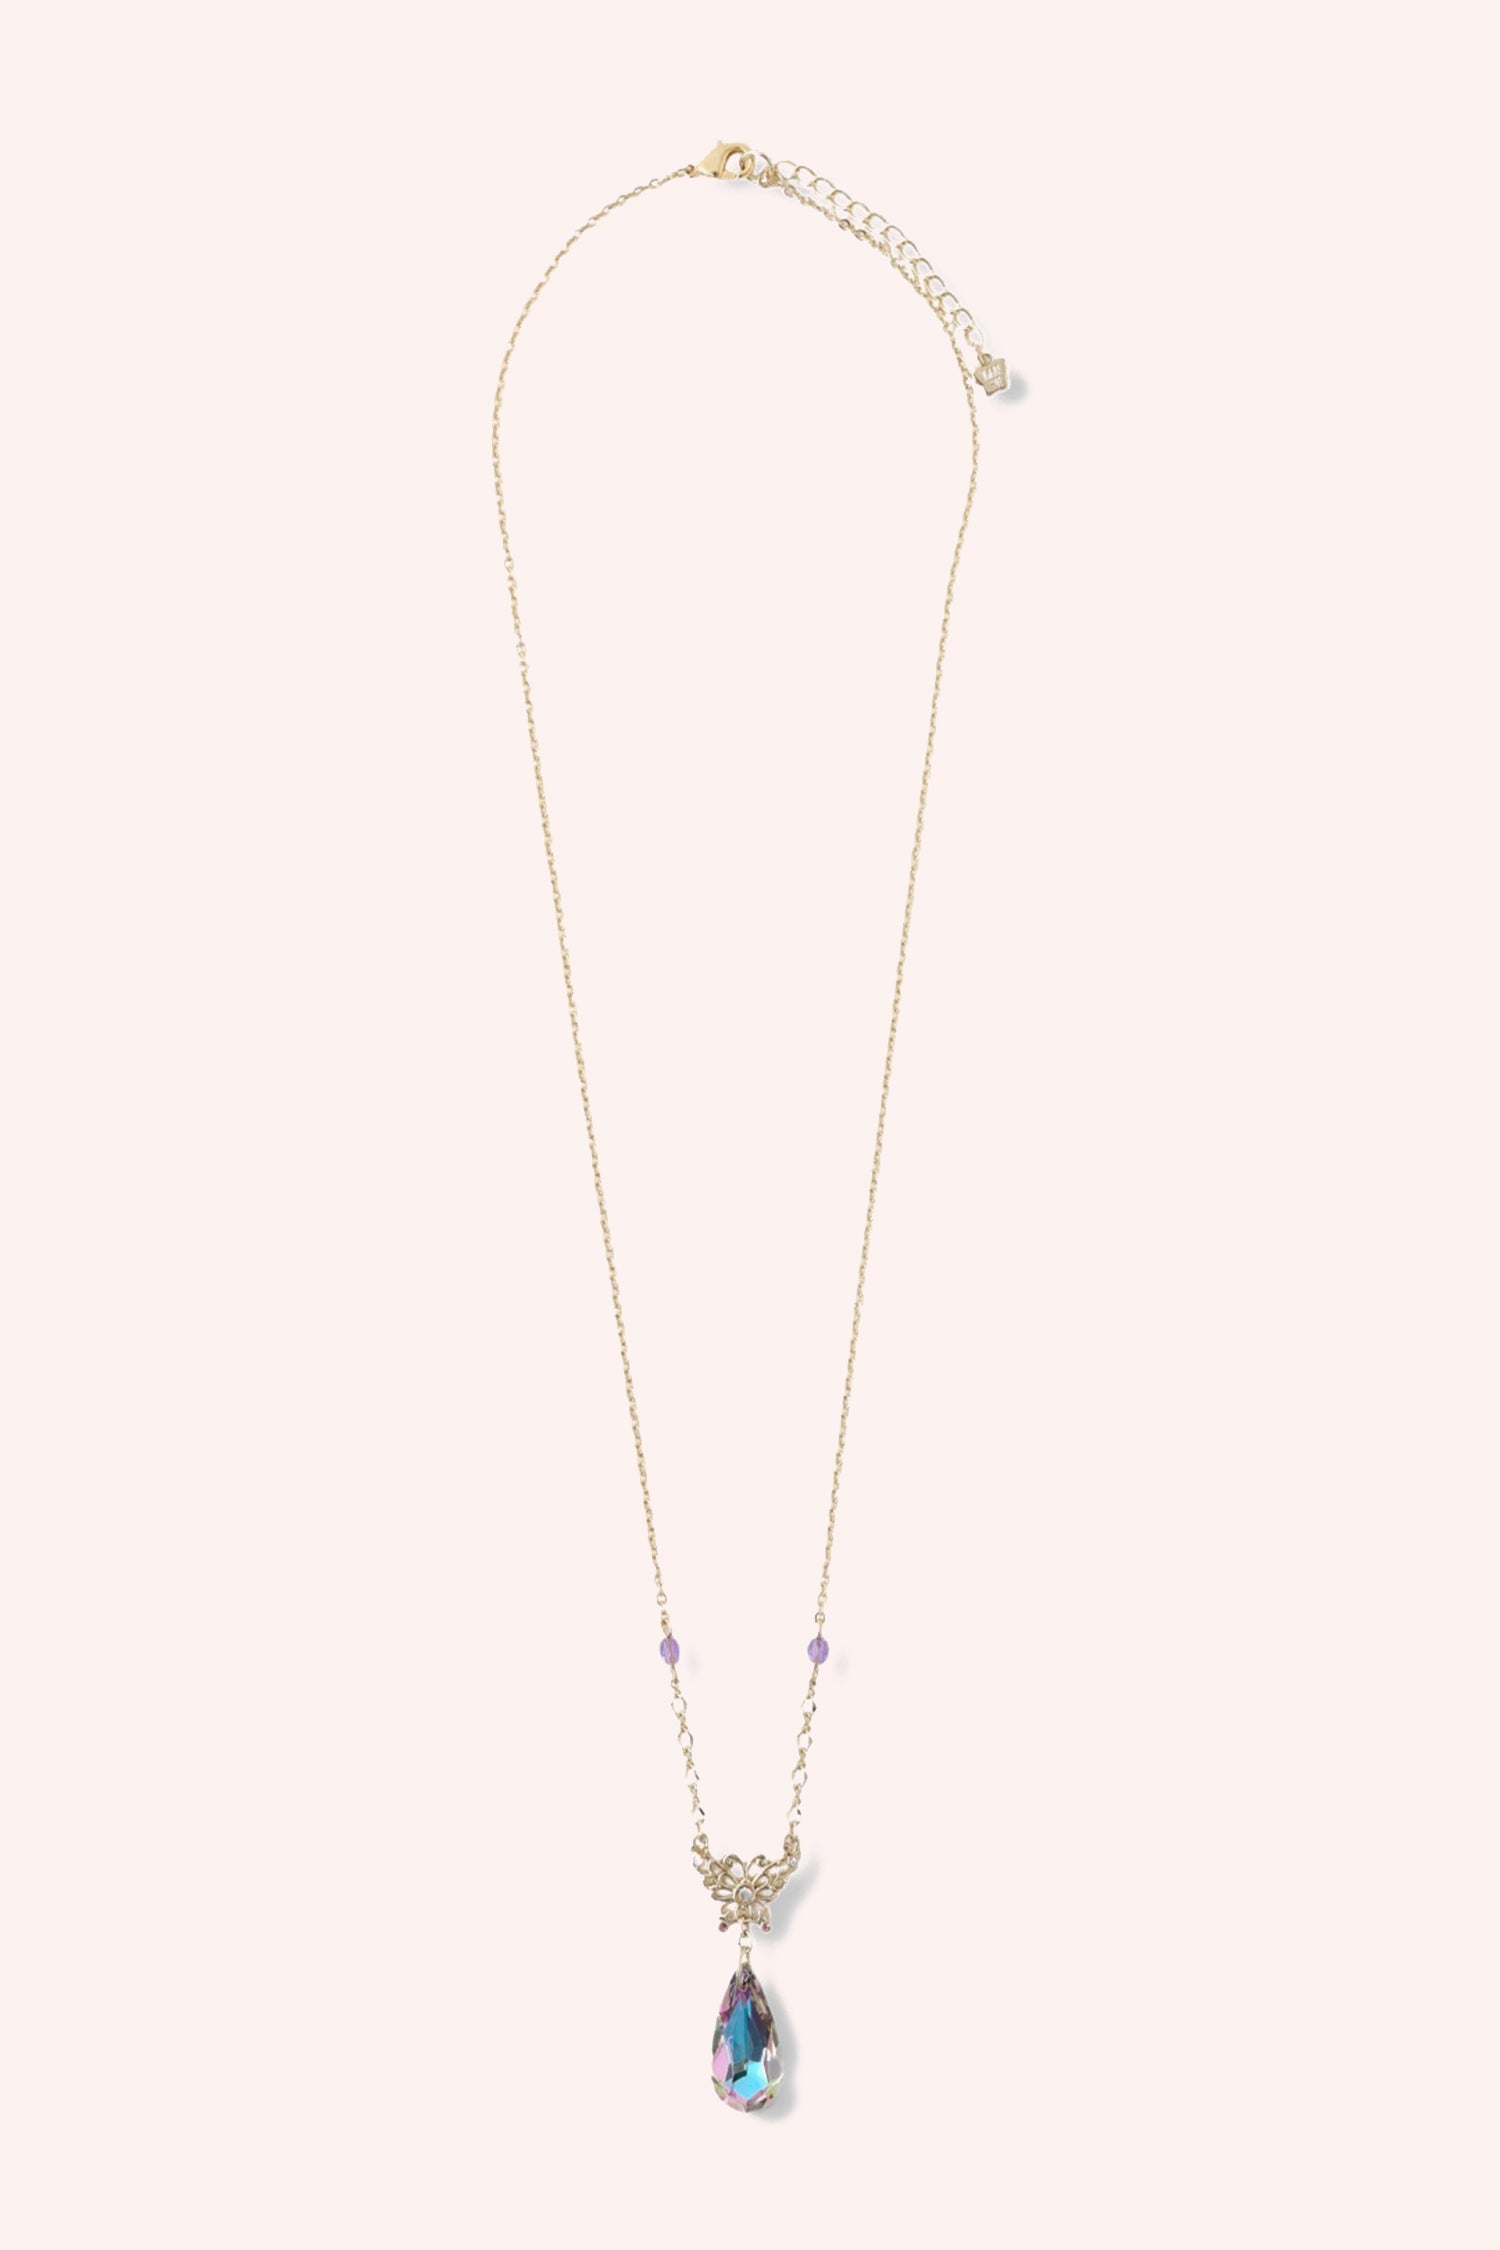 Aquamarine Pendant Necklace, small links chain, fairy-like butterfly, sea-green gemstone pendant